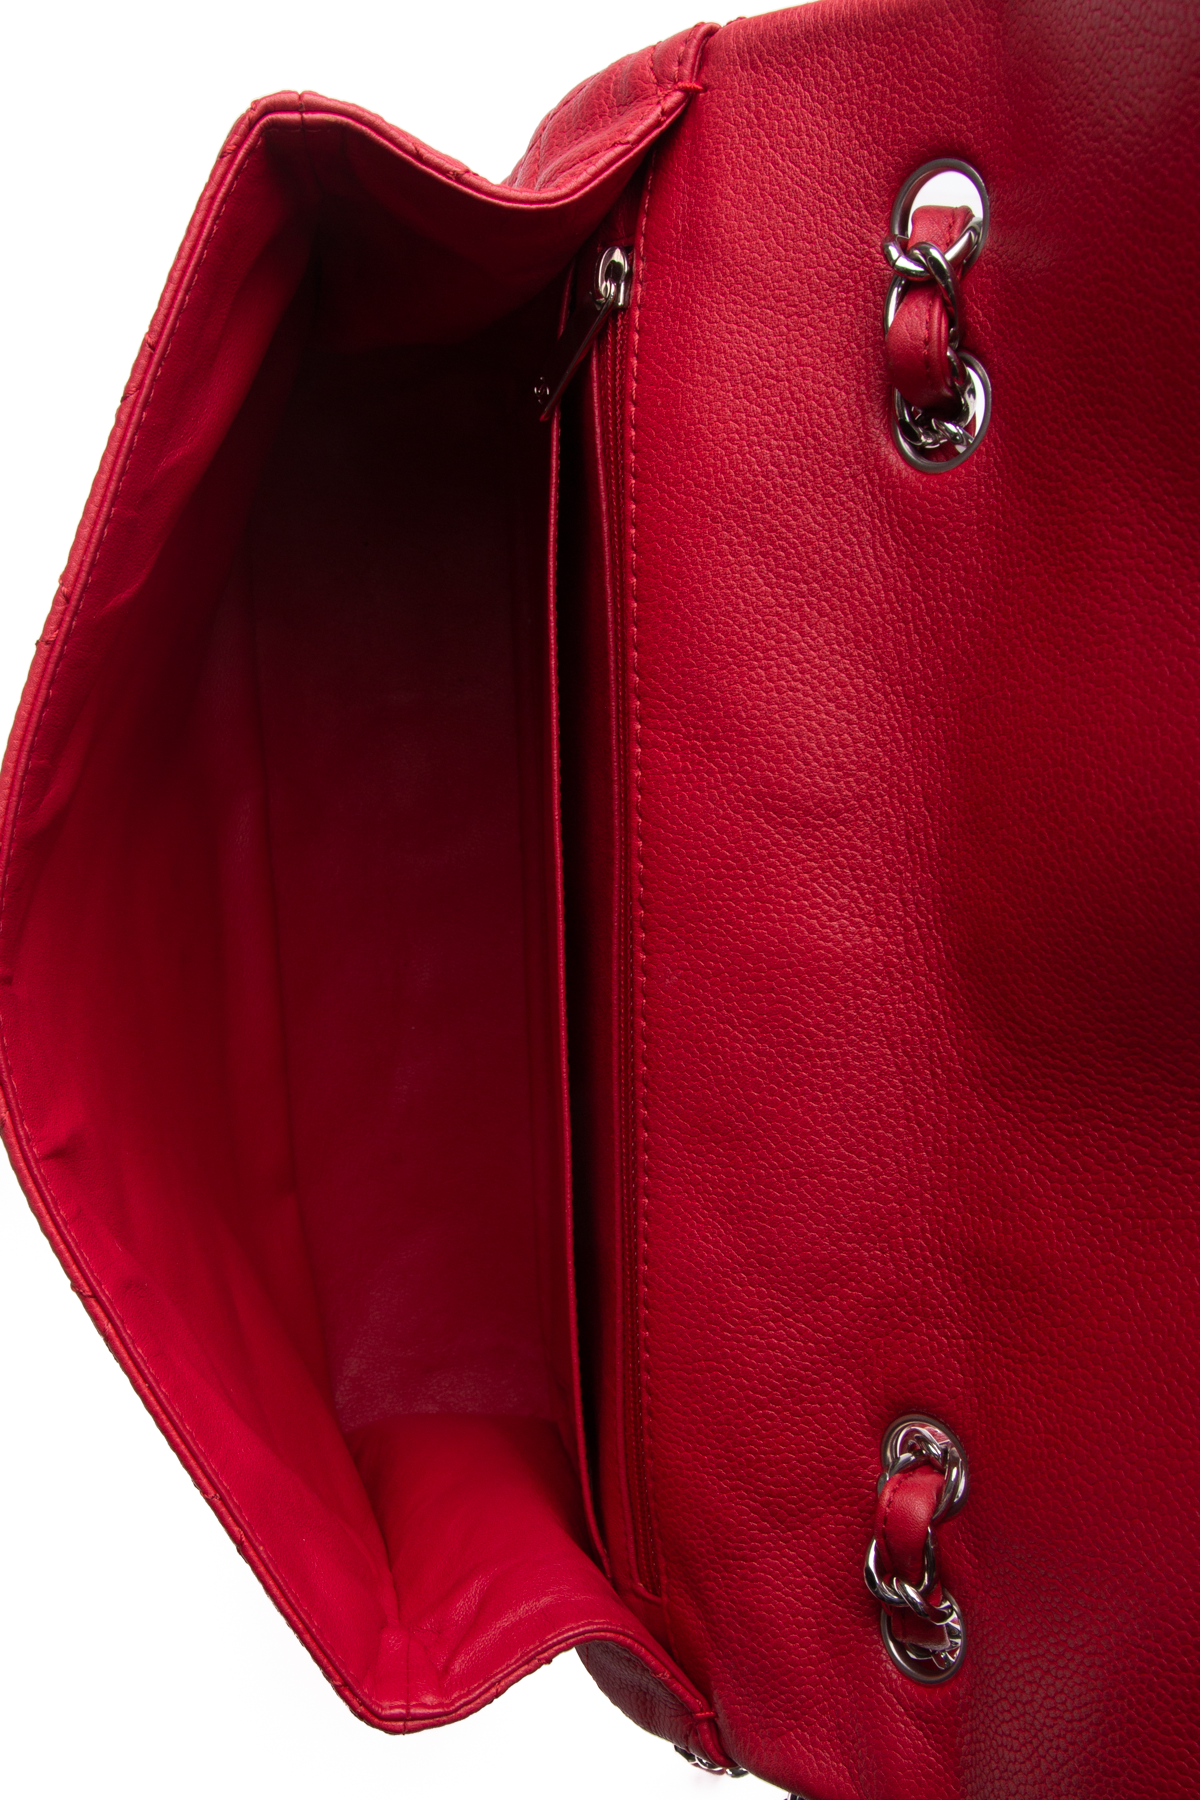 Chanel Jumbo Classic Single Flap Bag Lambskin Leather Red